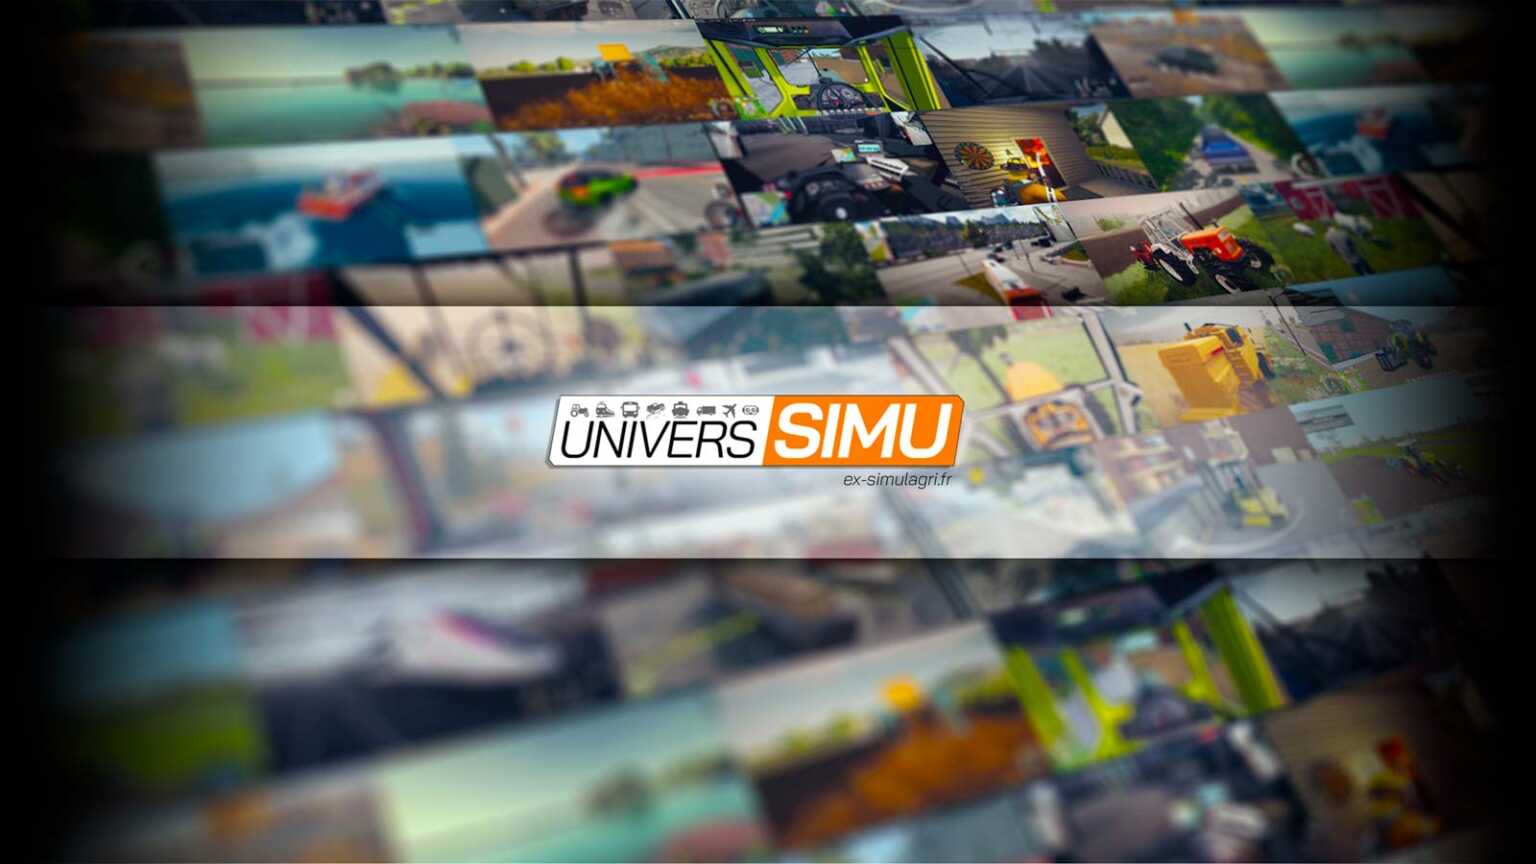 simulagri becomes simu universe